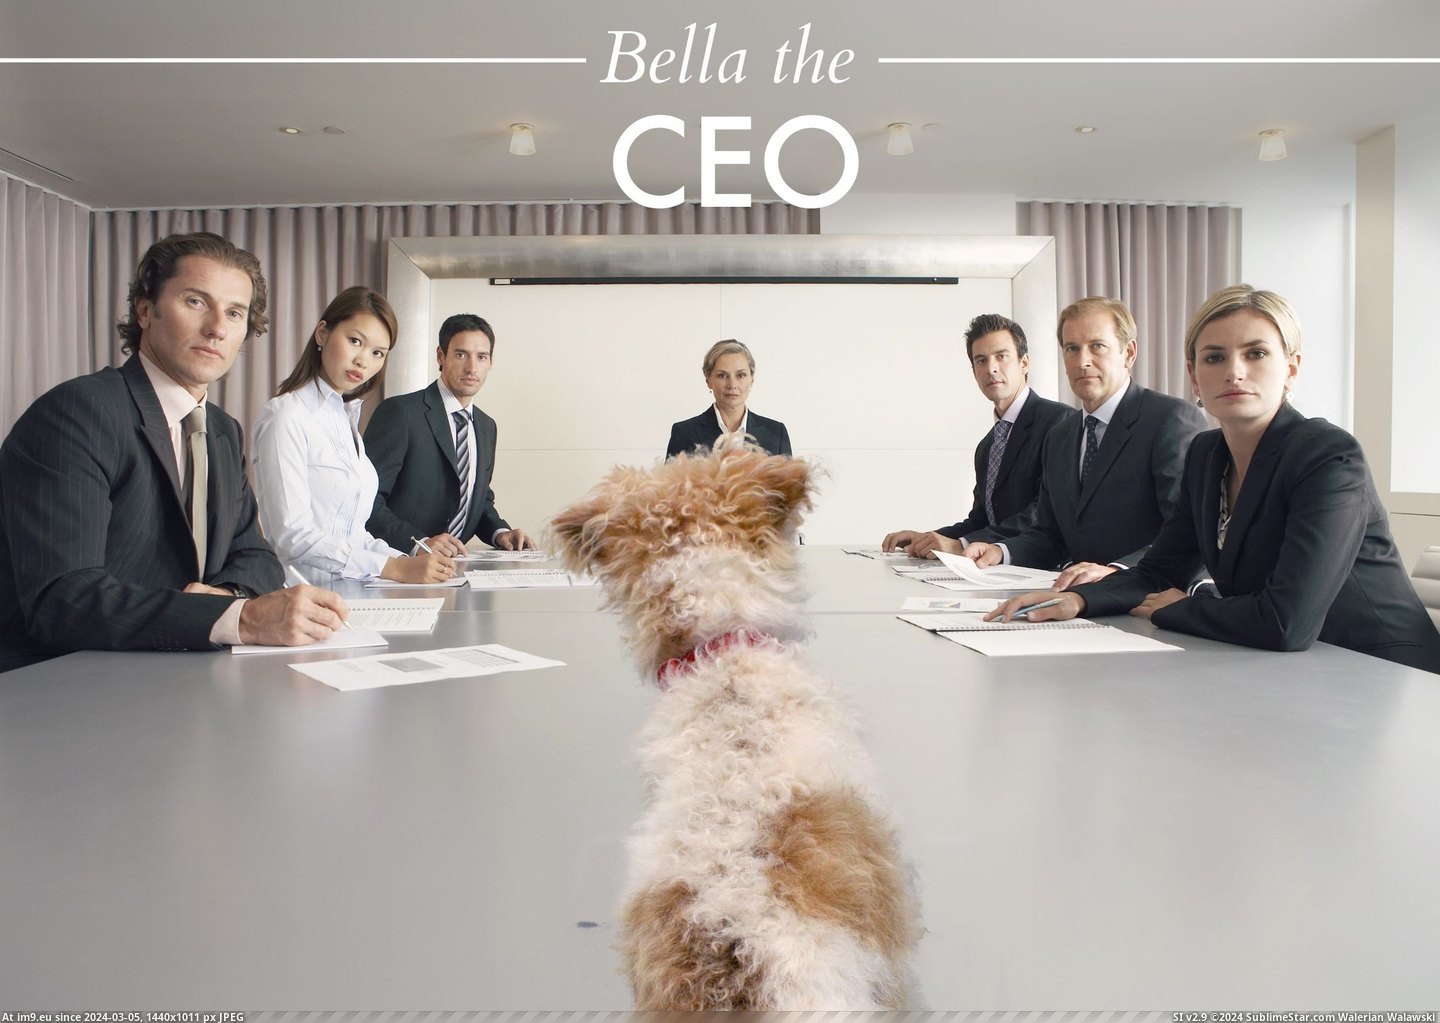 #For #Year #Dog #Calendar #Bella #Workplace #Christmas #Family #Called [Aww] Every Christmas I make a calendar of my dog for my family. This year's calendar is called 'Bella in the Workplace 2014'. I Pic. (Obraz z album My r/AWW favs))